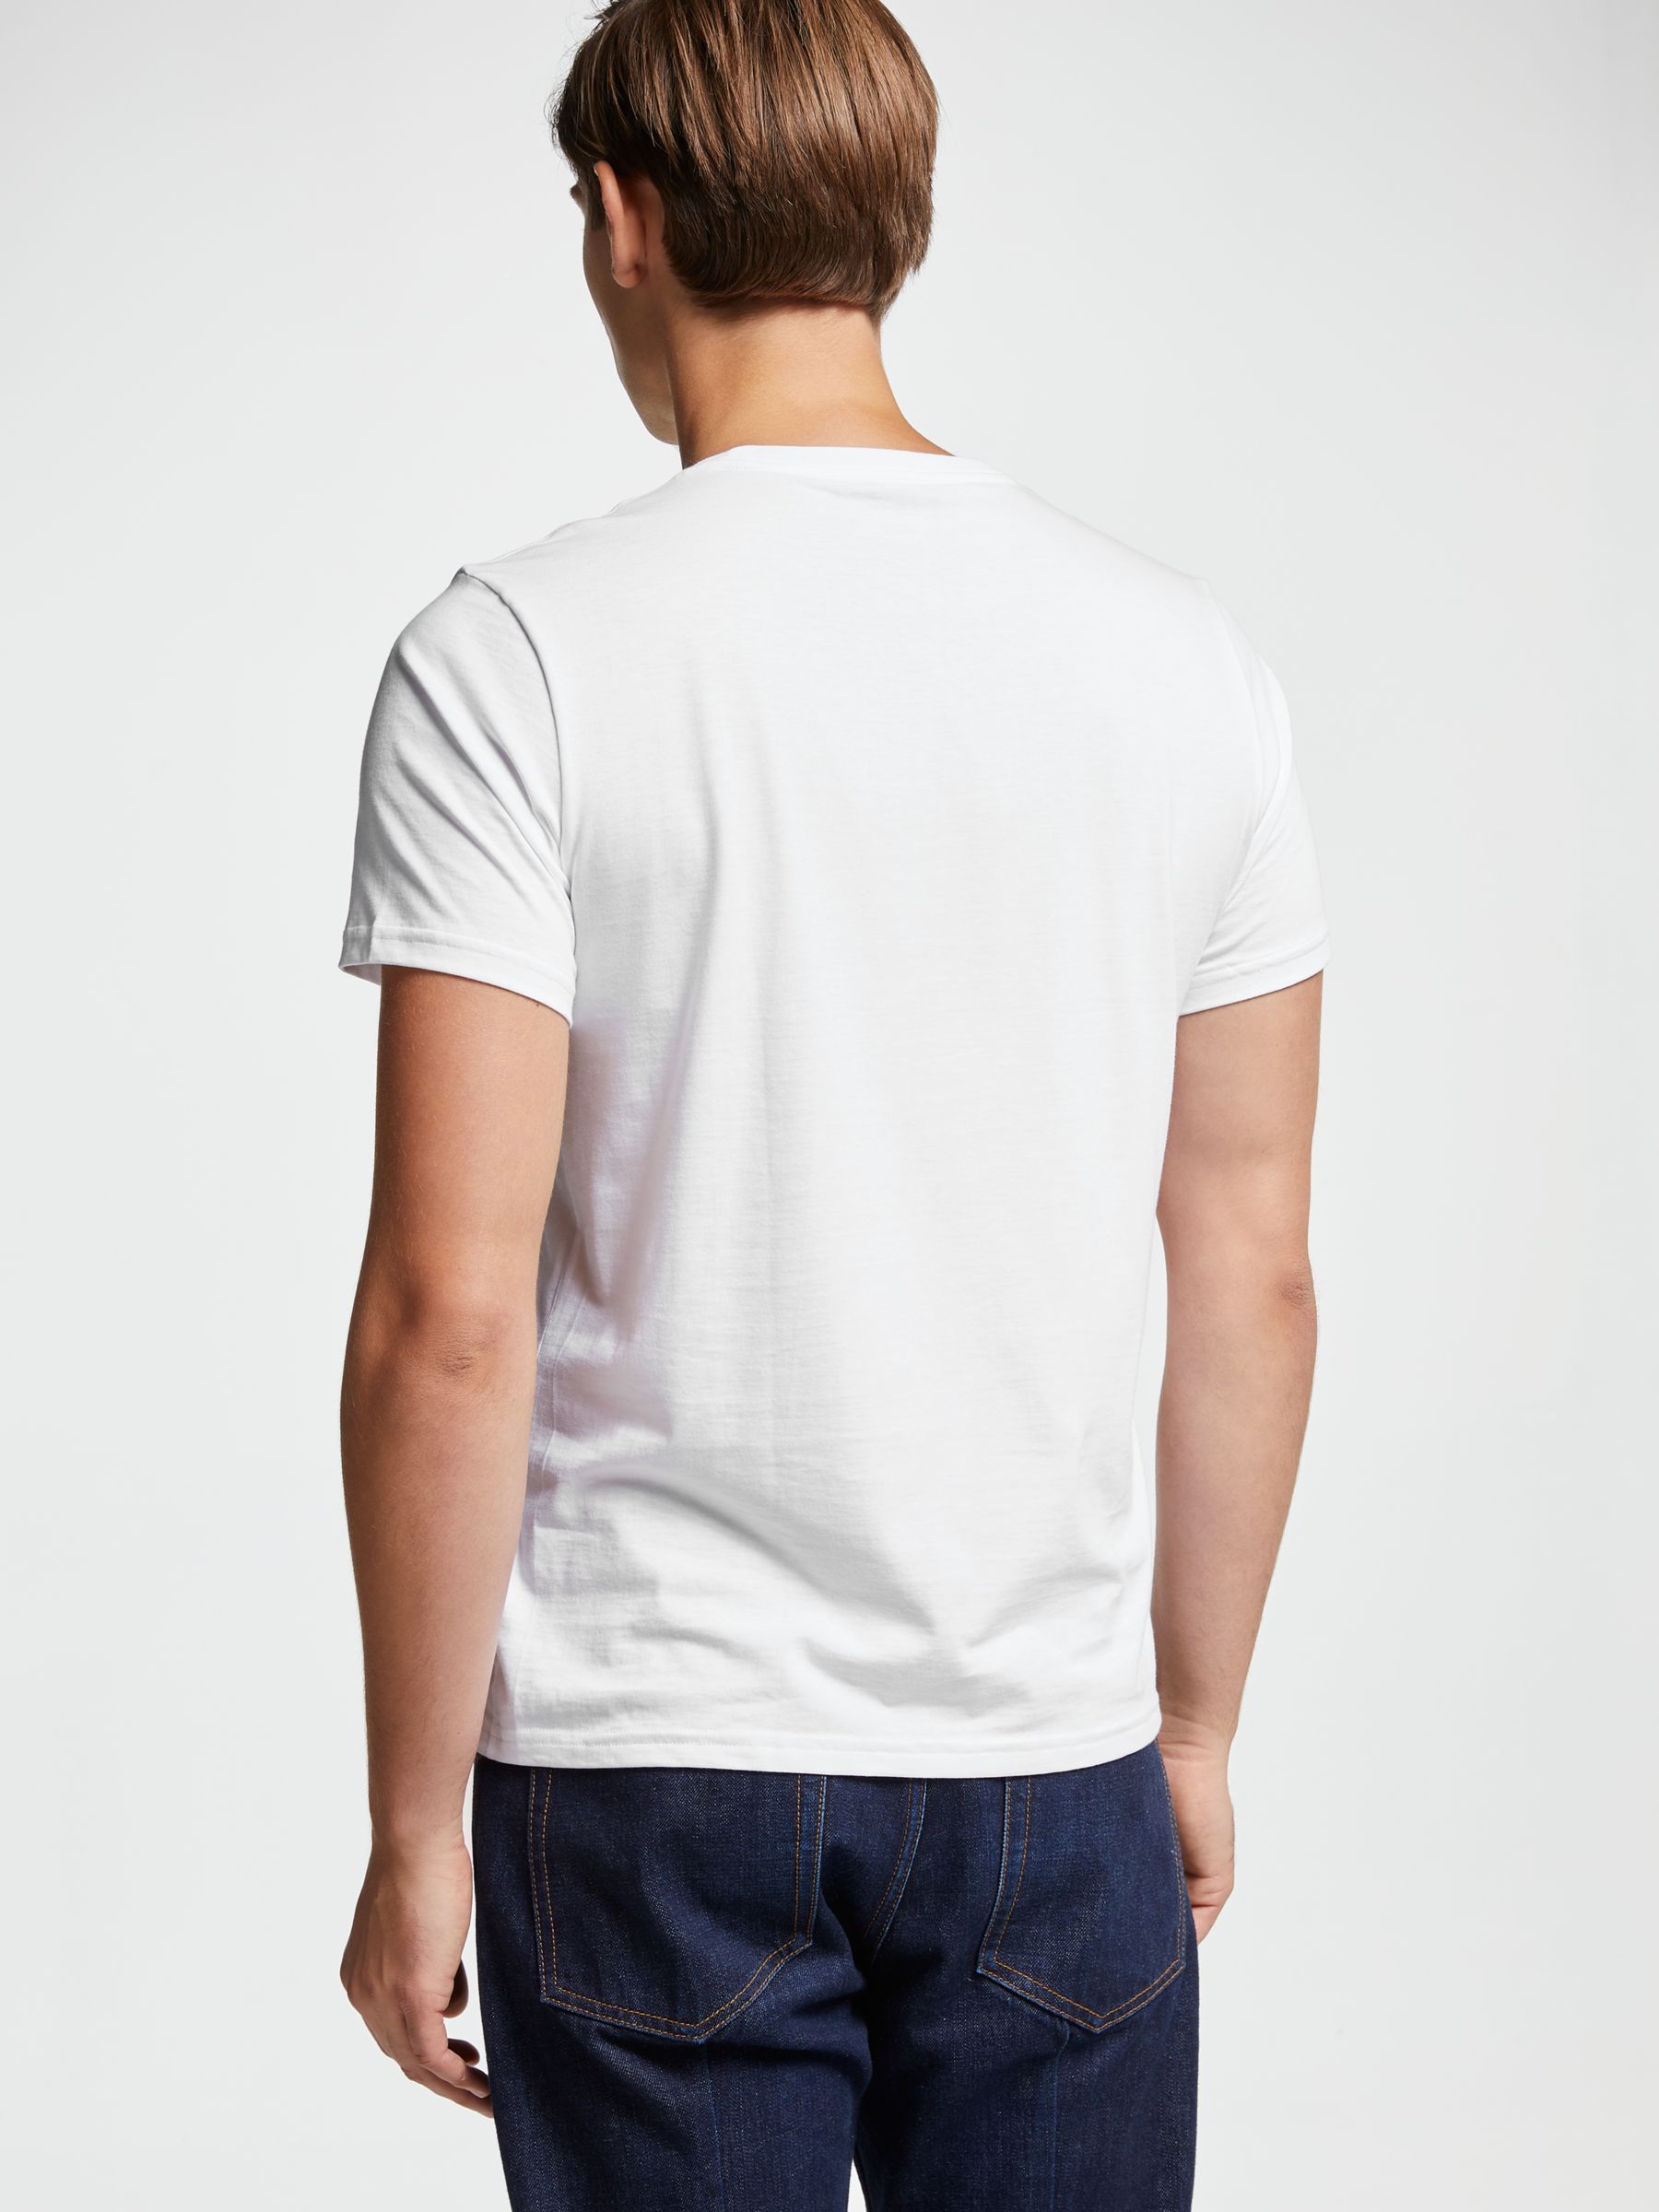 Polo Ralph Lauren Liquid Cotton T-Shirt, White, M